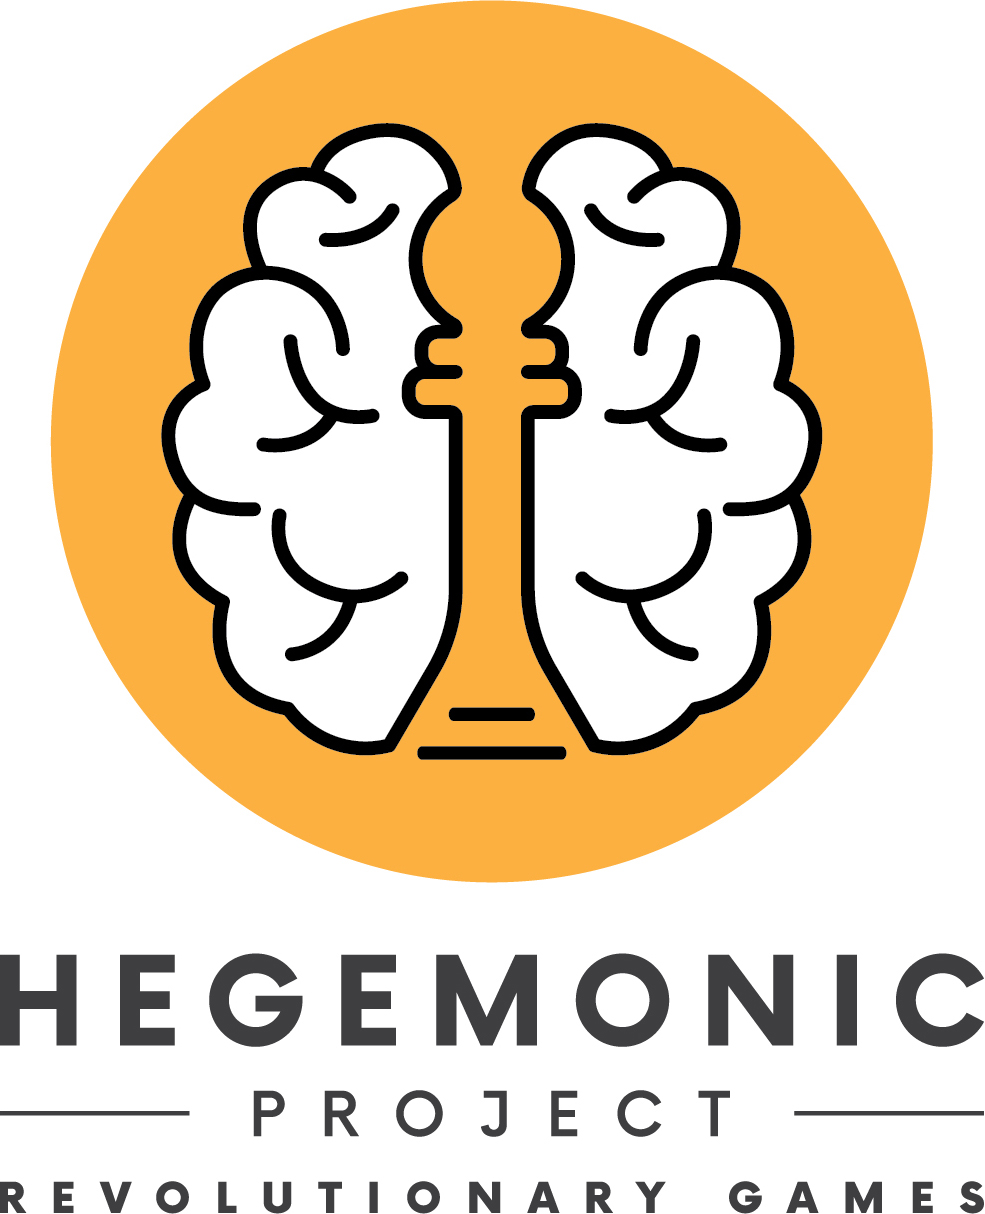 Hegemonic Project Games logo